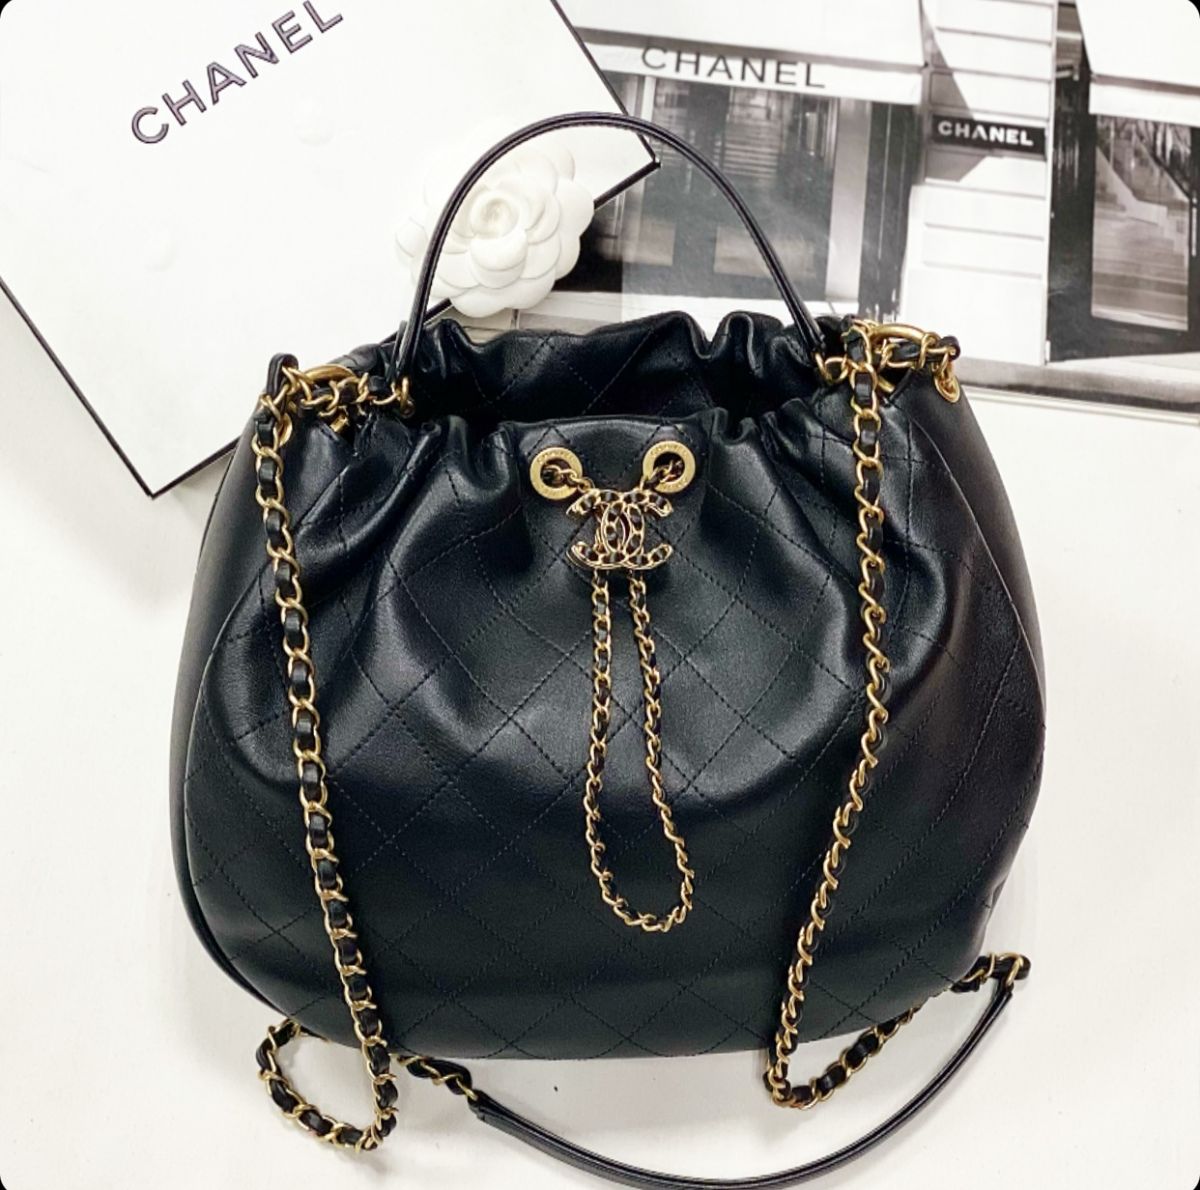 Сумка Chanel размер 30/25 цена 284 620 руб 